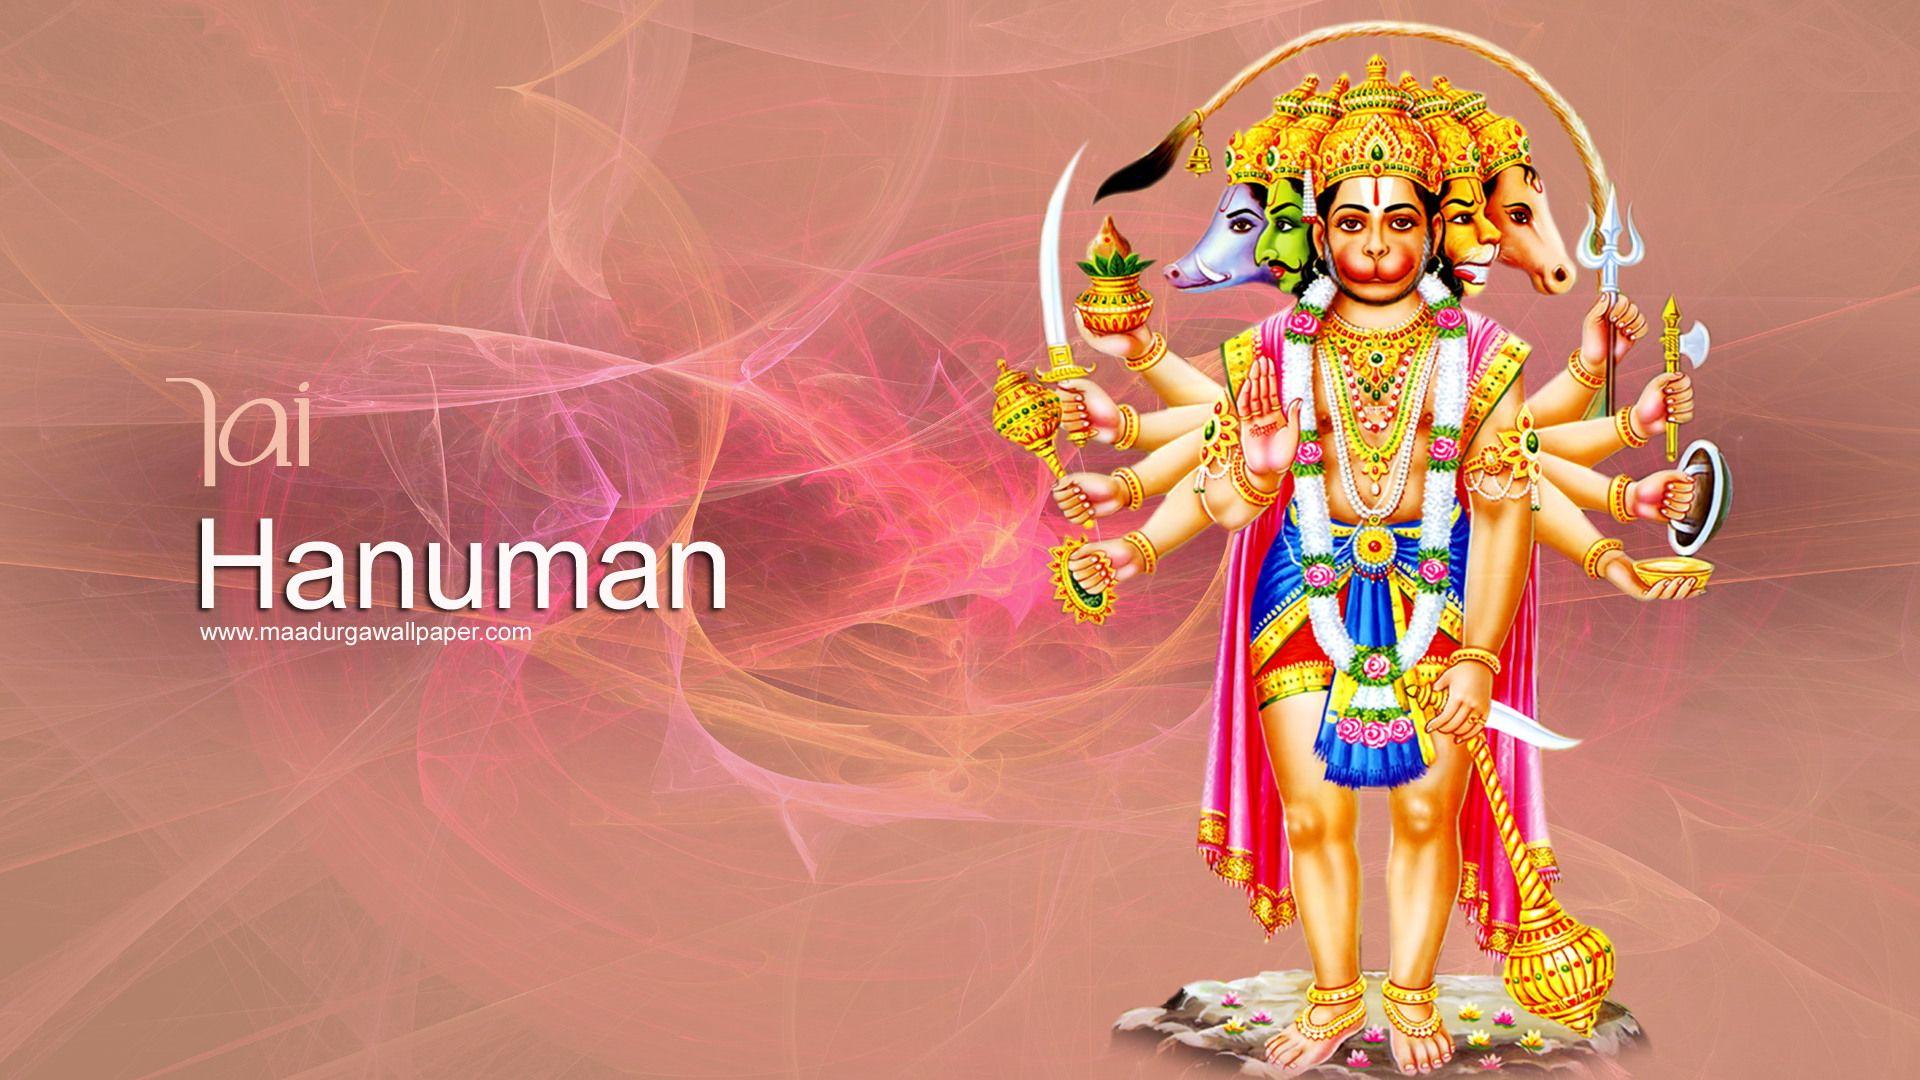 Hanuman ji image & HD wallpaper